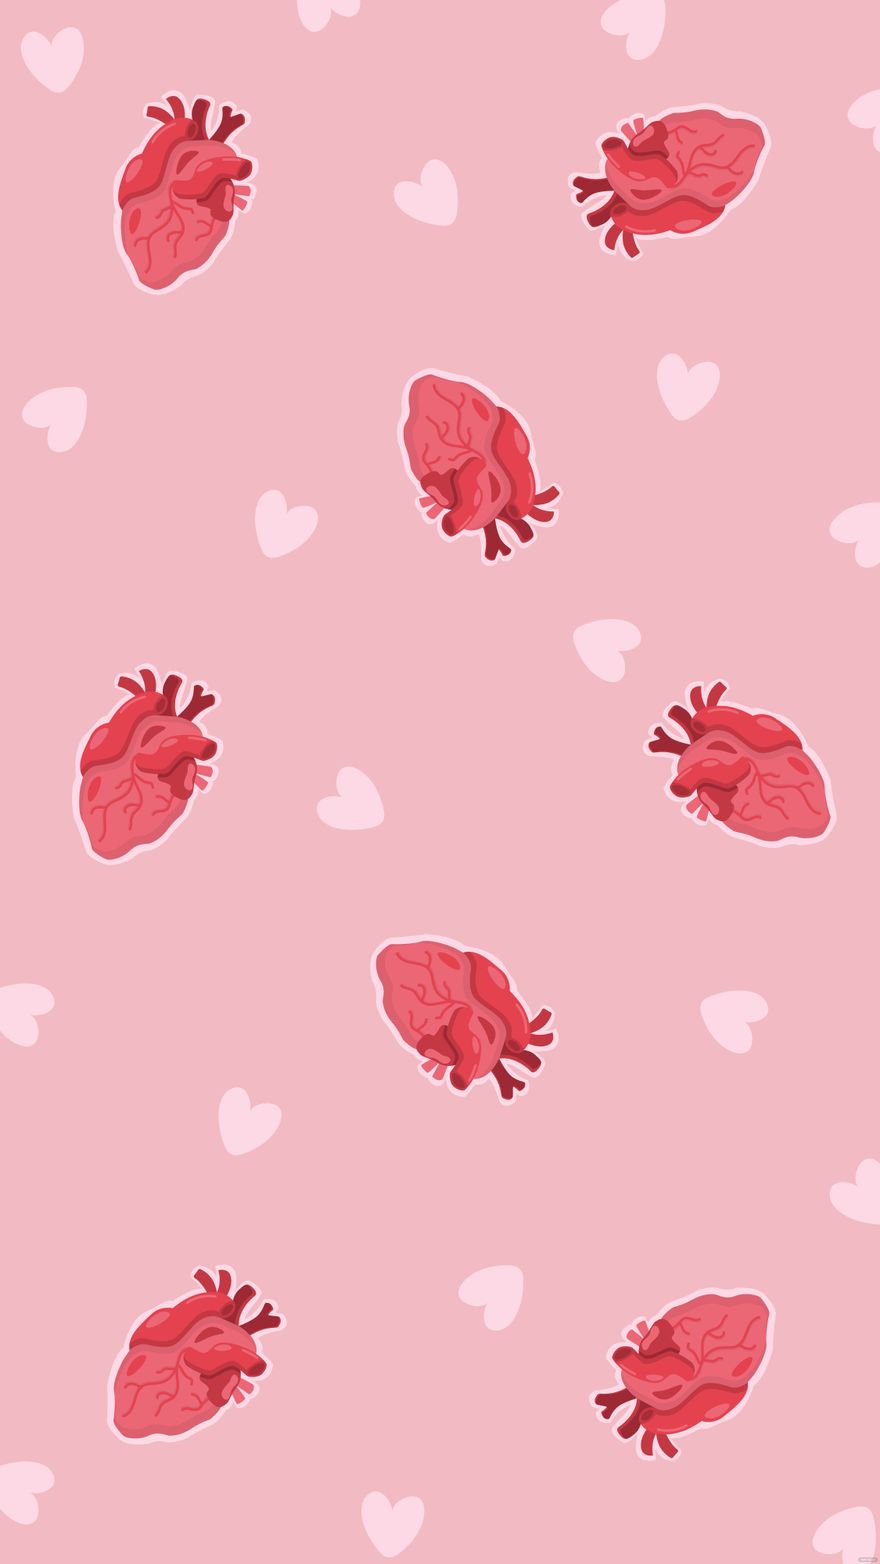 Free Human Heart Background in Illustrator, EPS, SVG, JPG